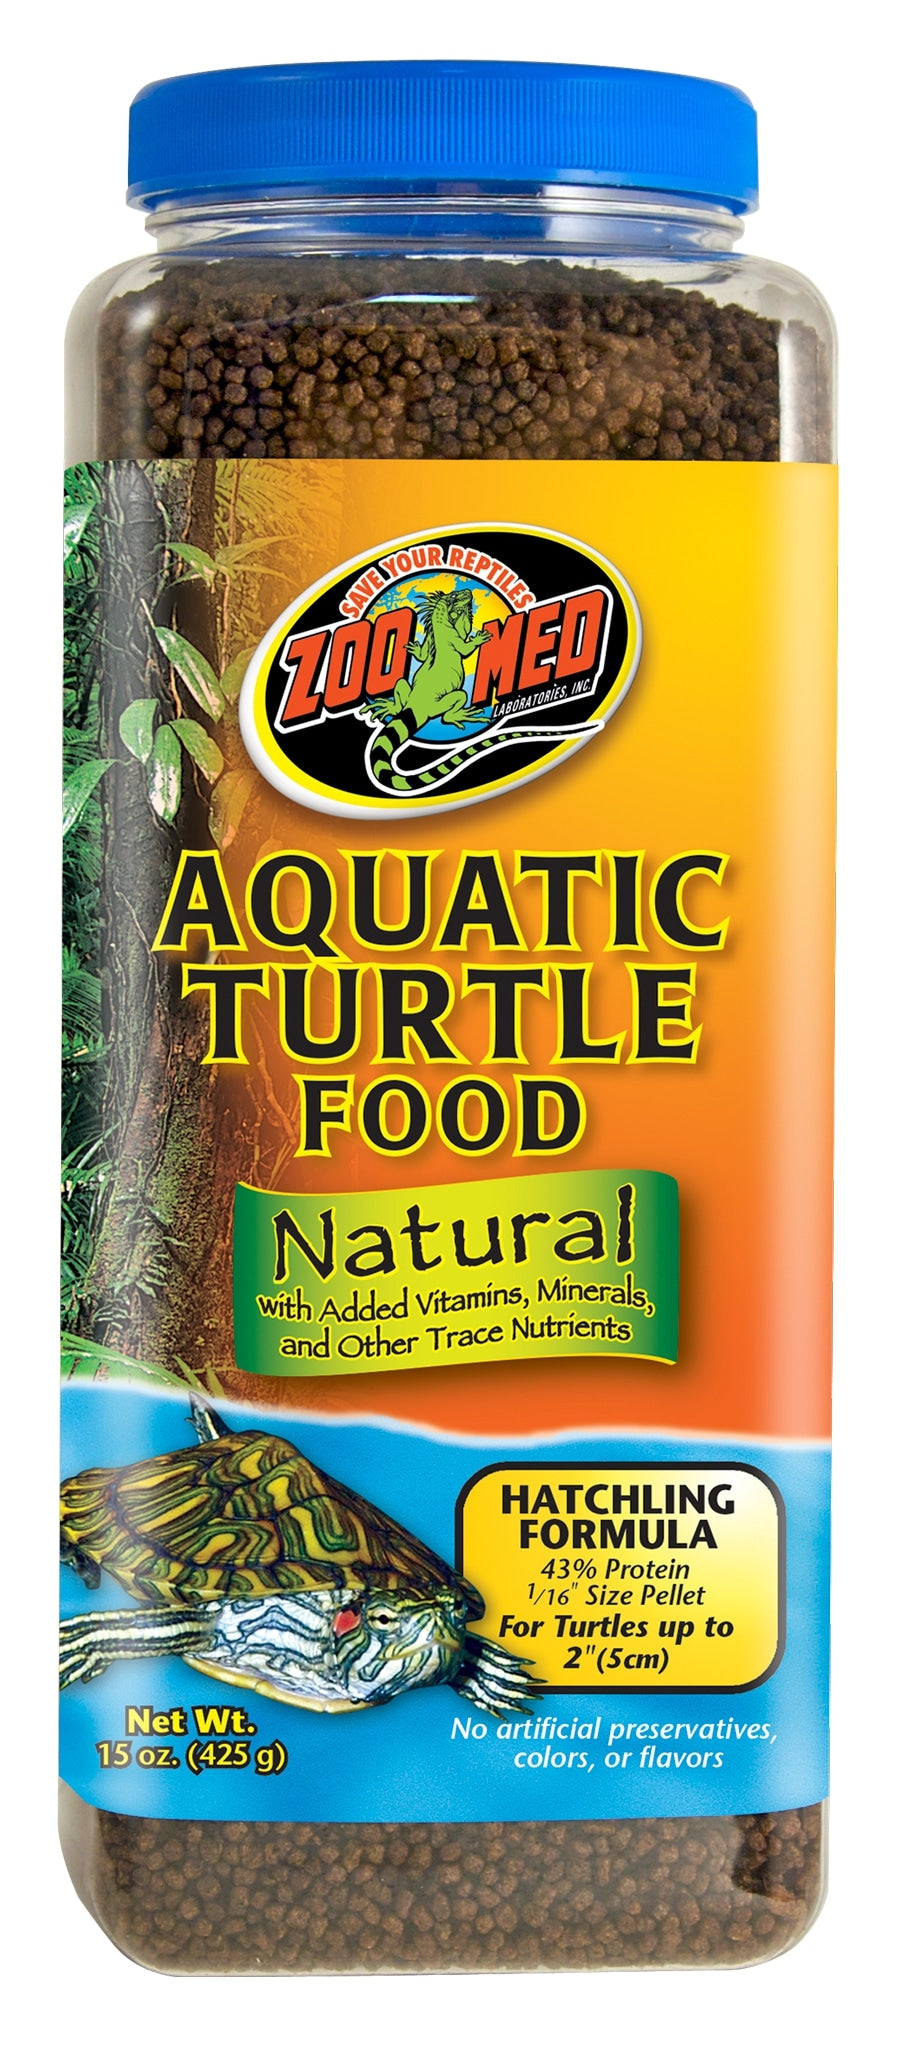 Zoo Med Natural Aquatic Turtle Food Hatchling Formula